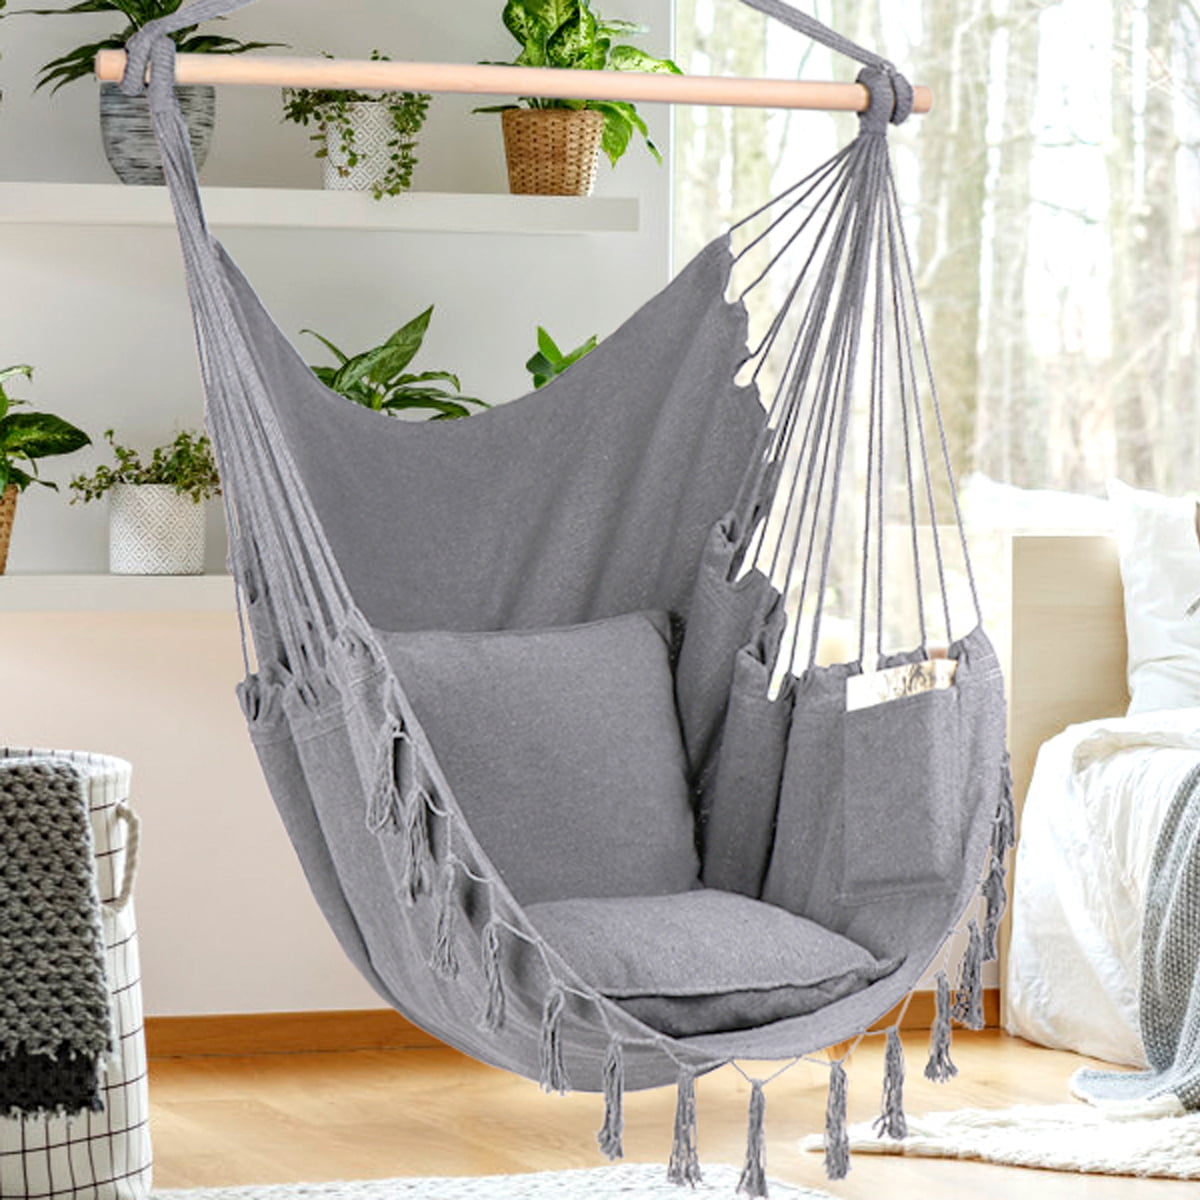 Hammock Chair Swing Large Hanging Indoor Outdoor Kids Adult Gift Patio New 